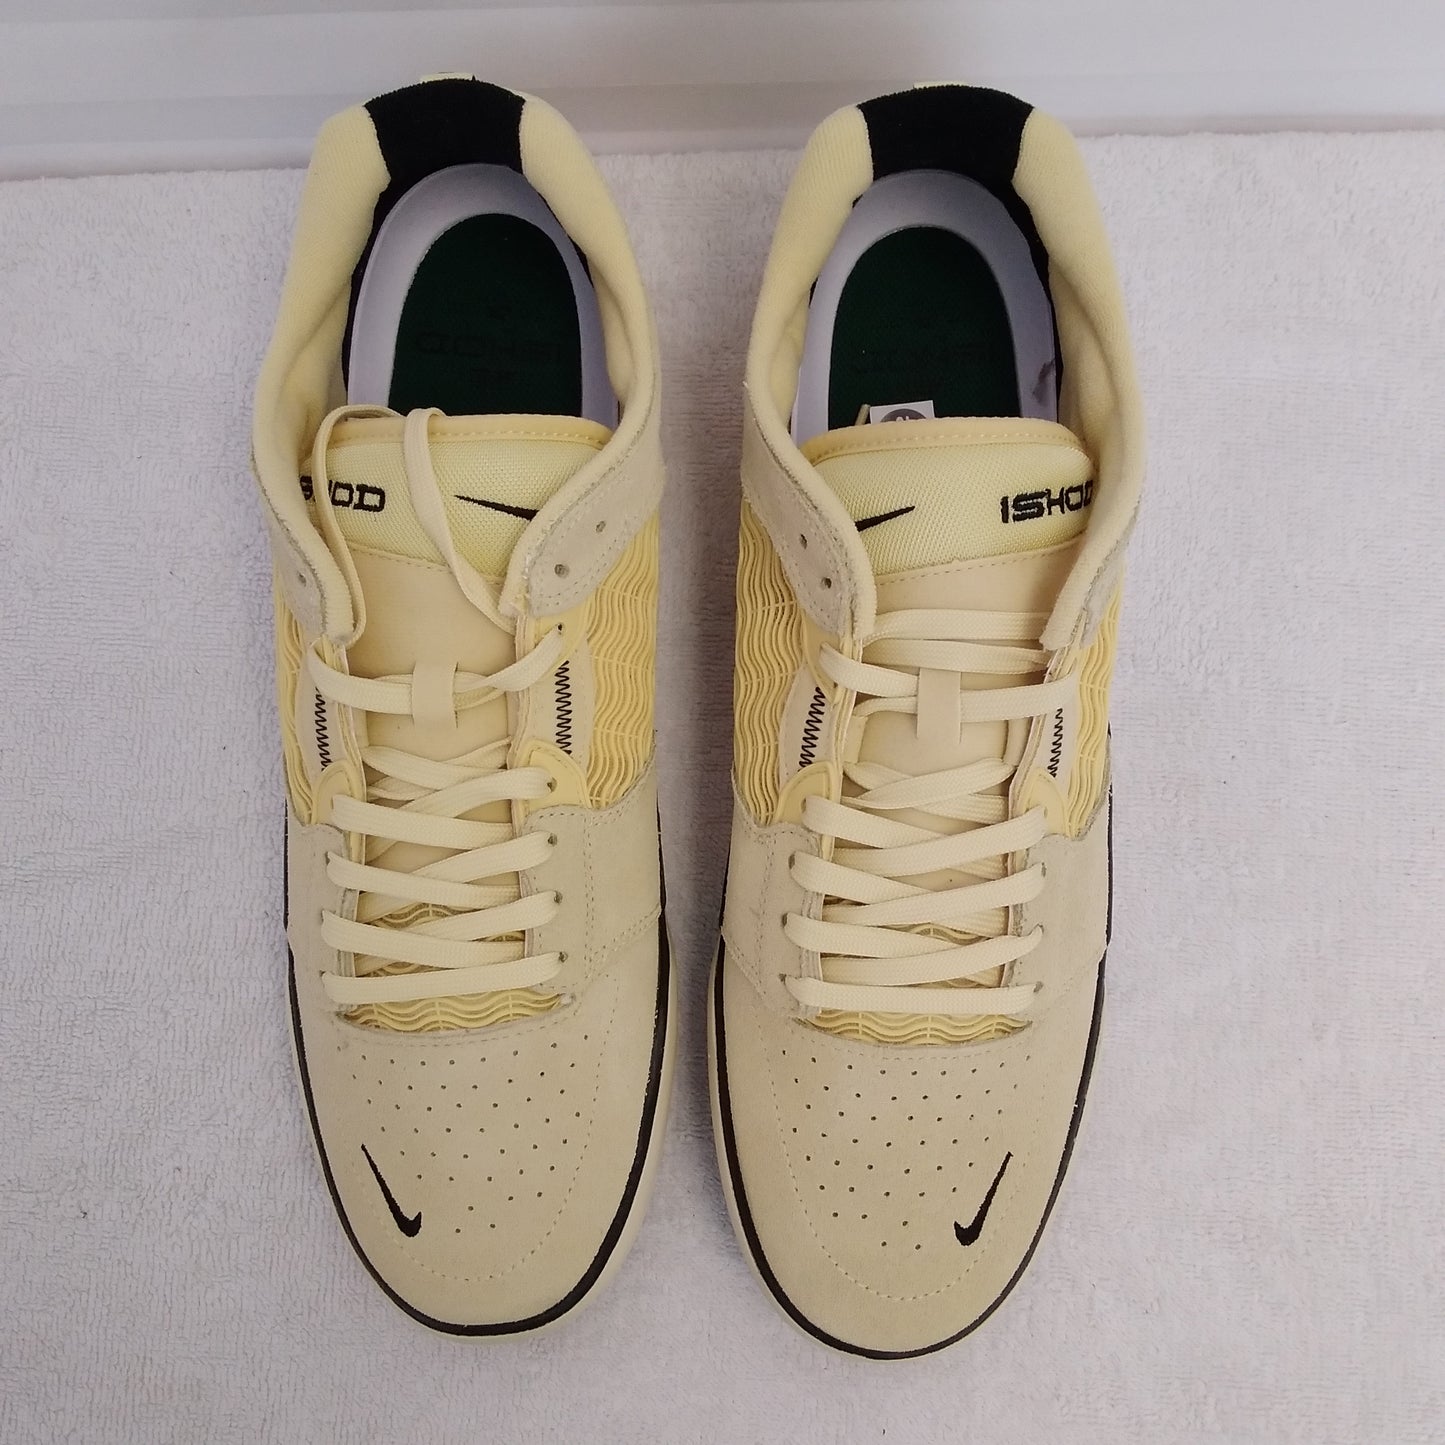 NIB - Nike SB ISHOD Lemon Wash/Black-Lemon Drop Sneakers - Size: Men 13 Women 14.5